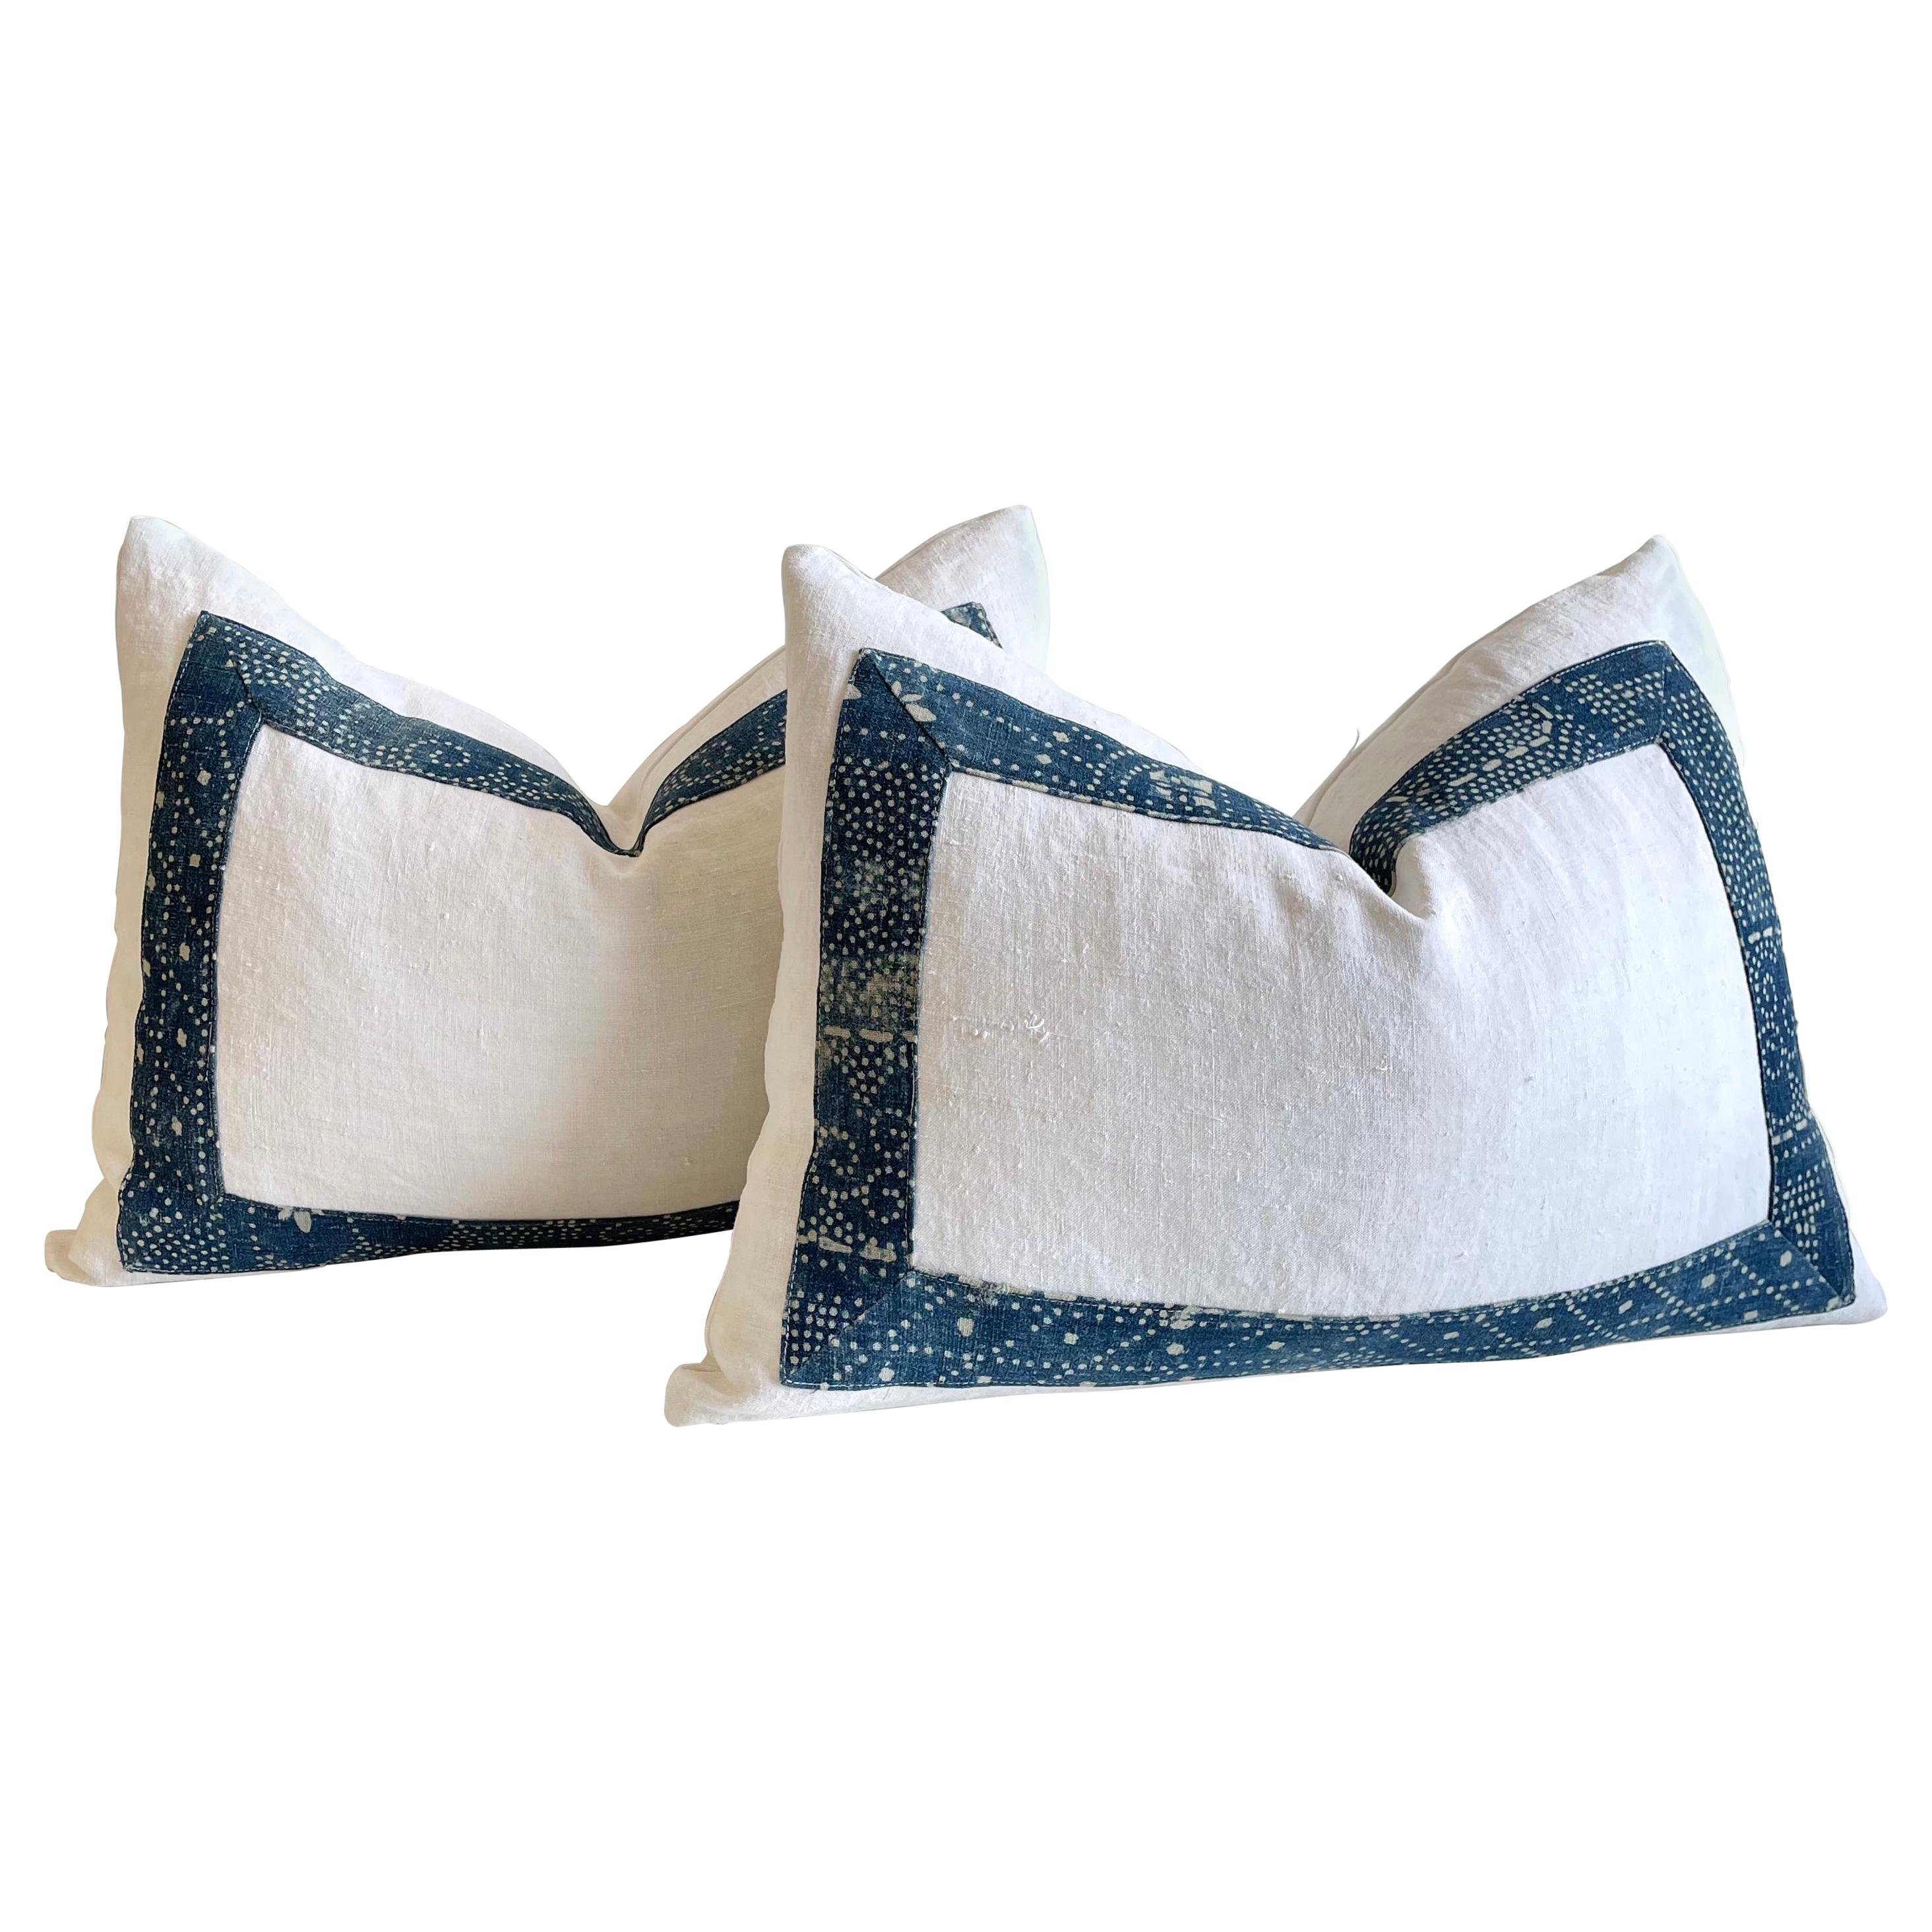 Pair of Vintage French Linen and Batik Lumbar Pillows